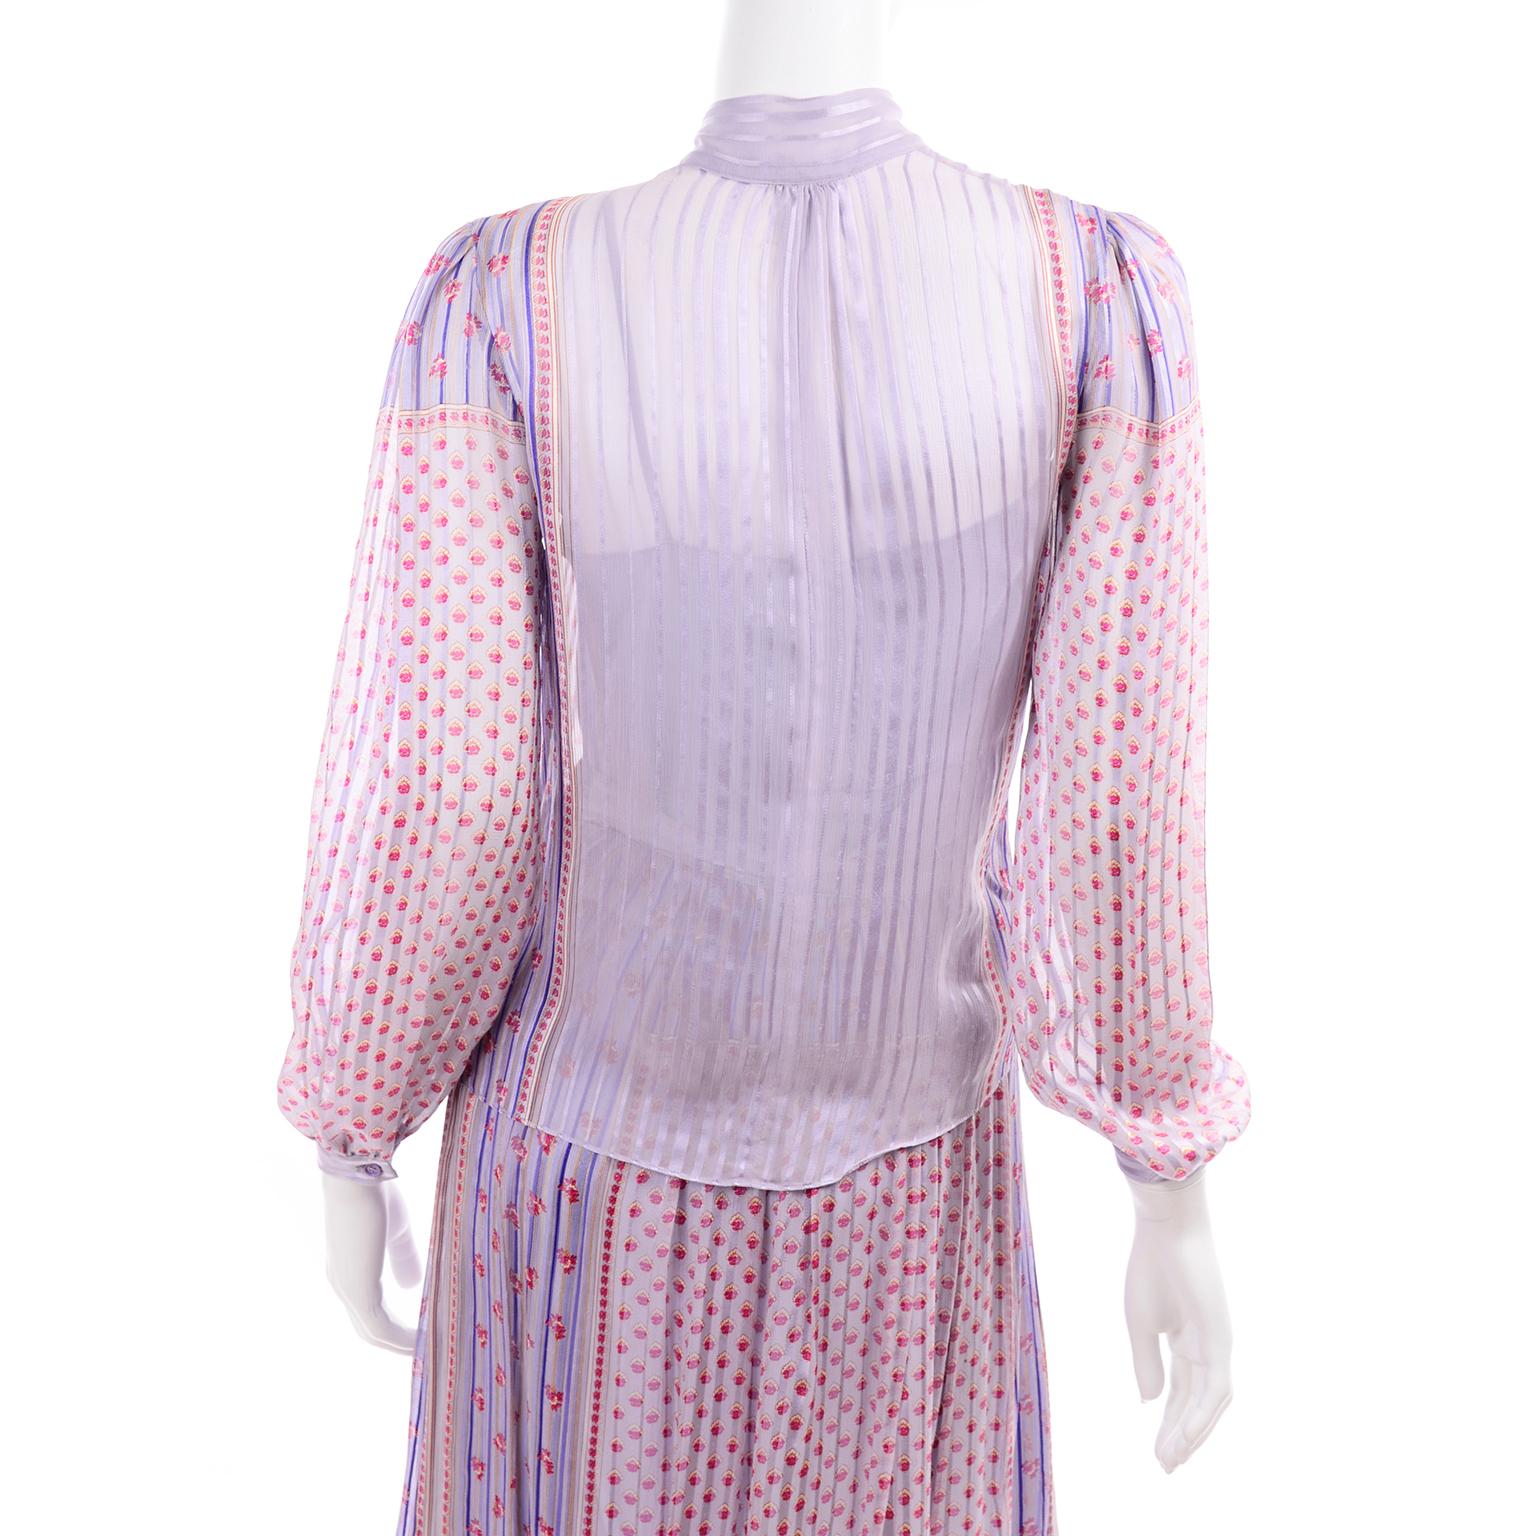 Designer Silk Chiffon 2 Pc Dress in Purple Yellow Pink Floral Print Pattern Mix 6